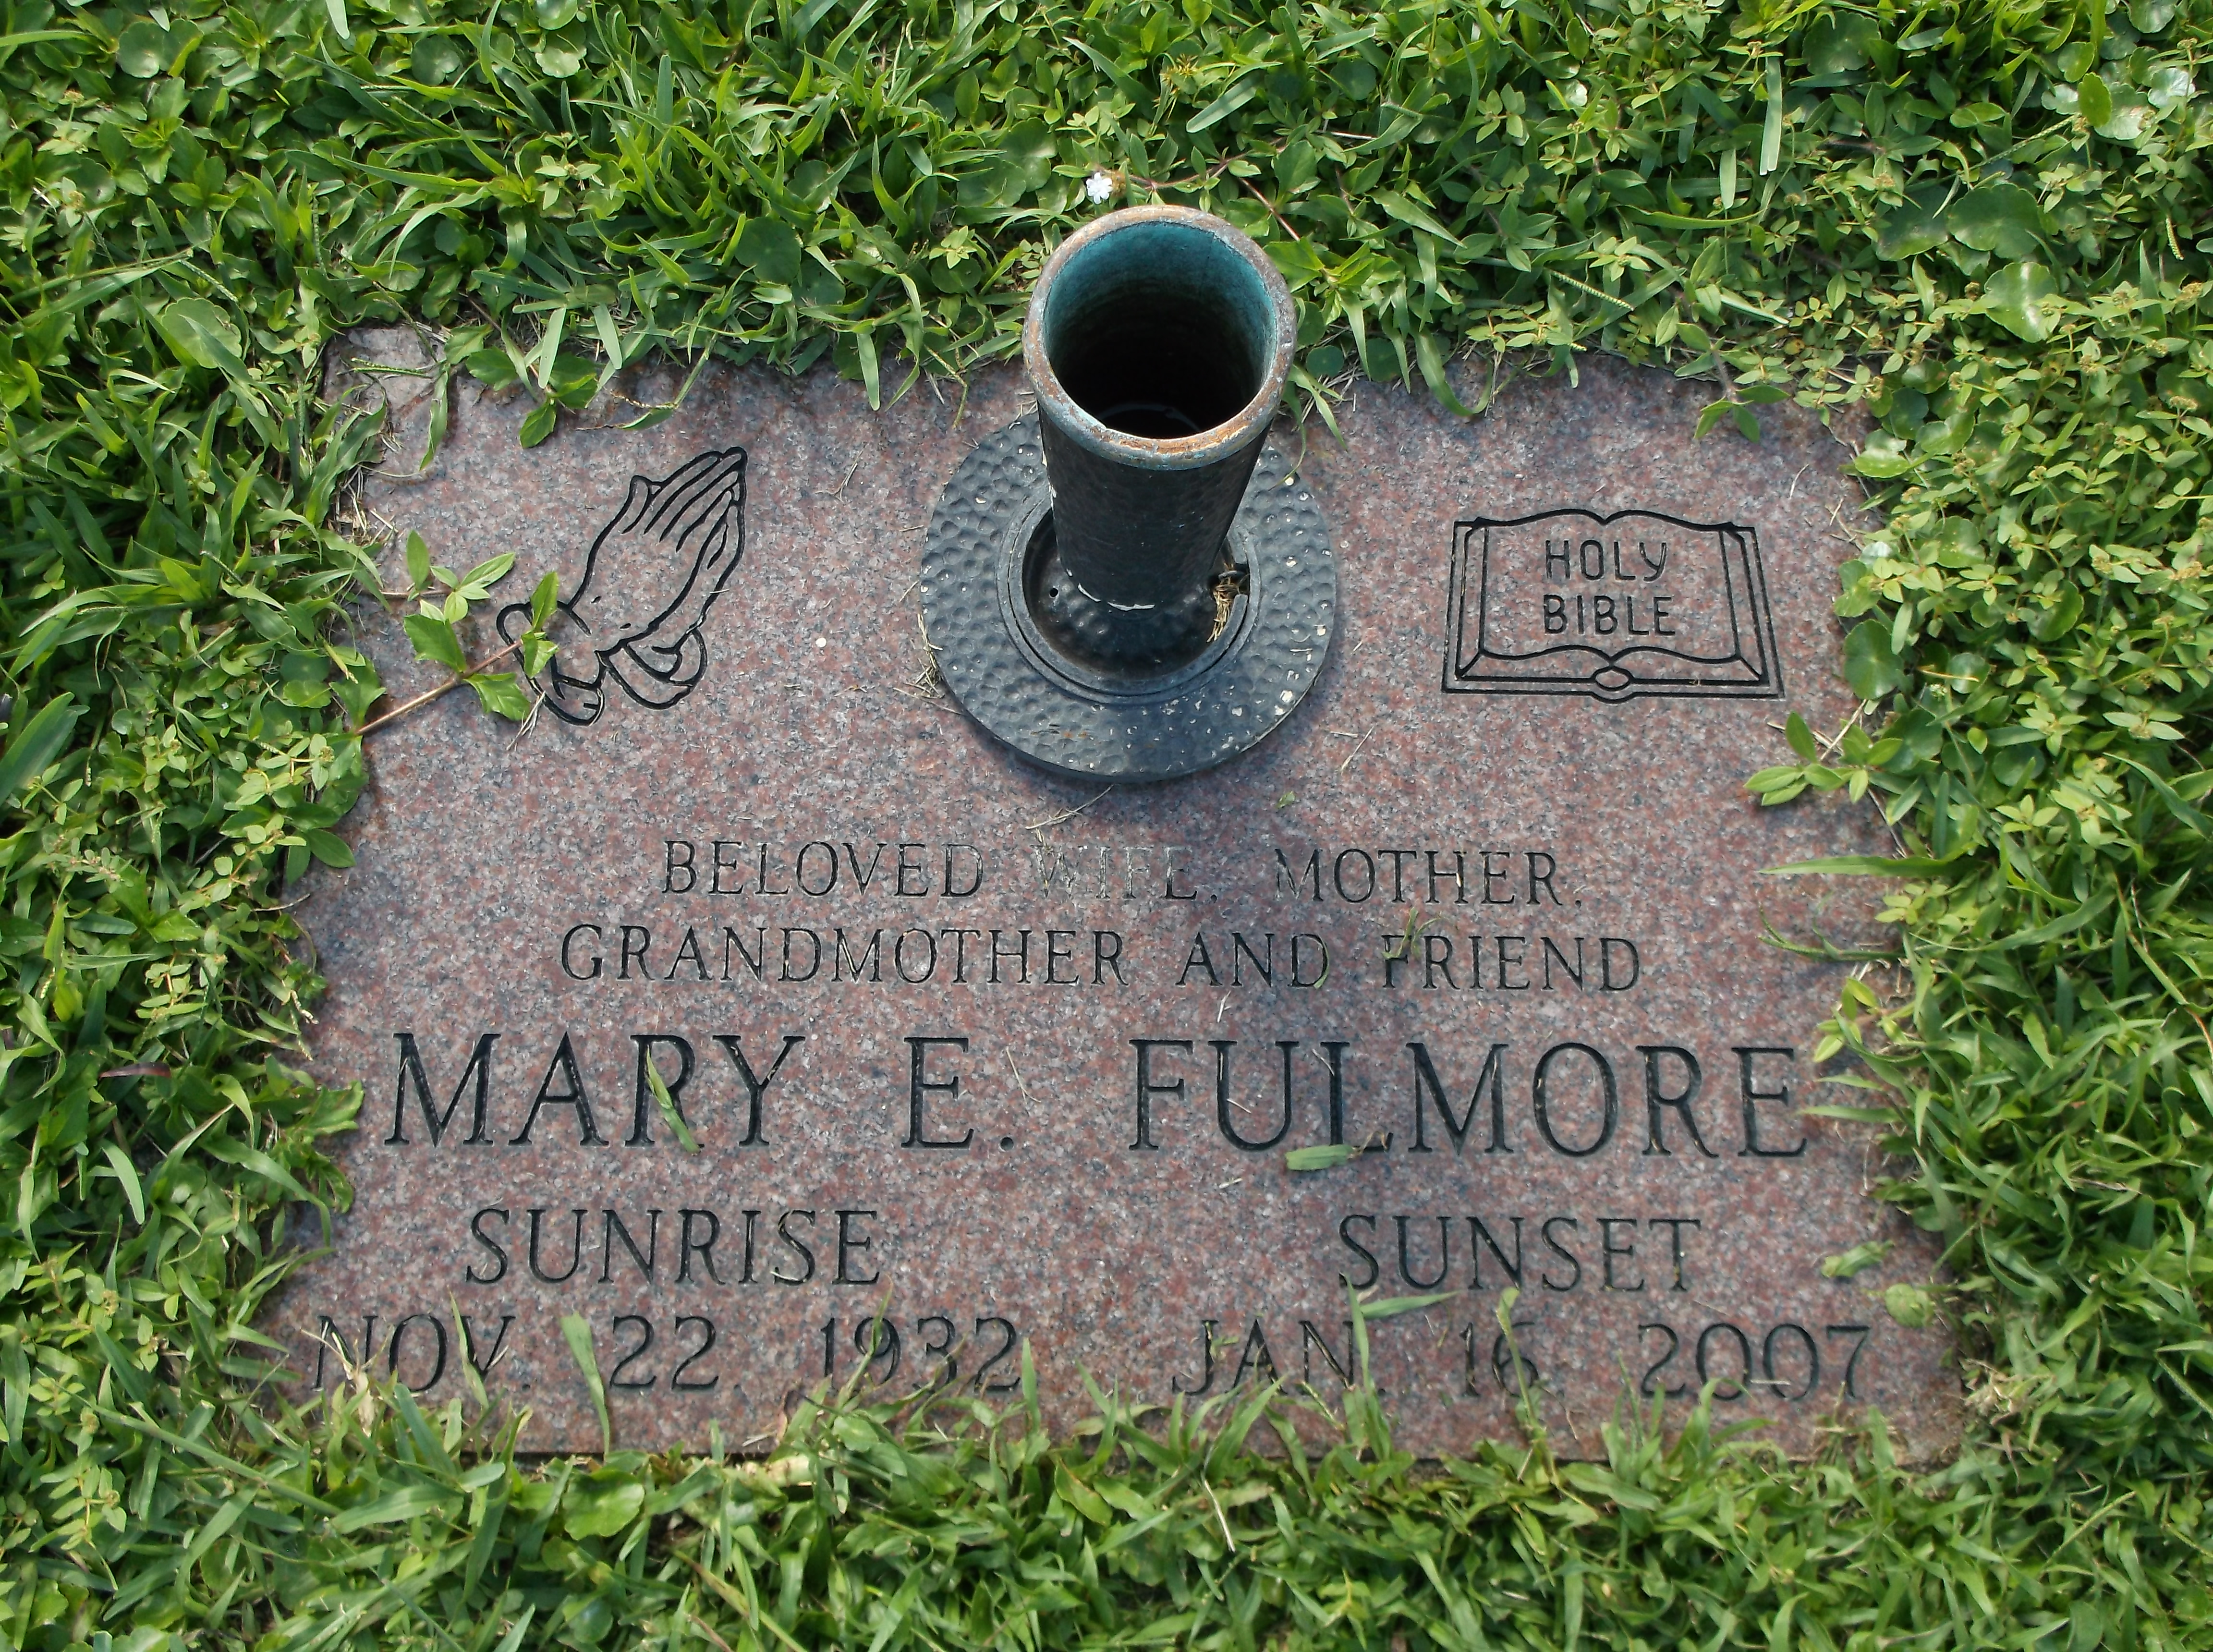 Mary E Fulmore